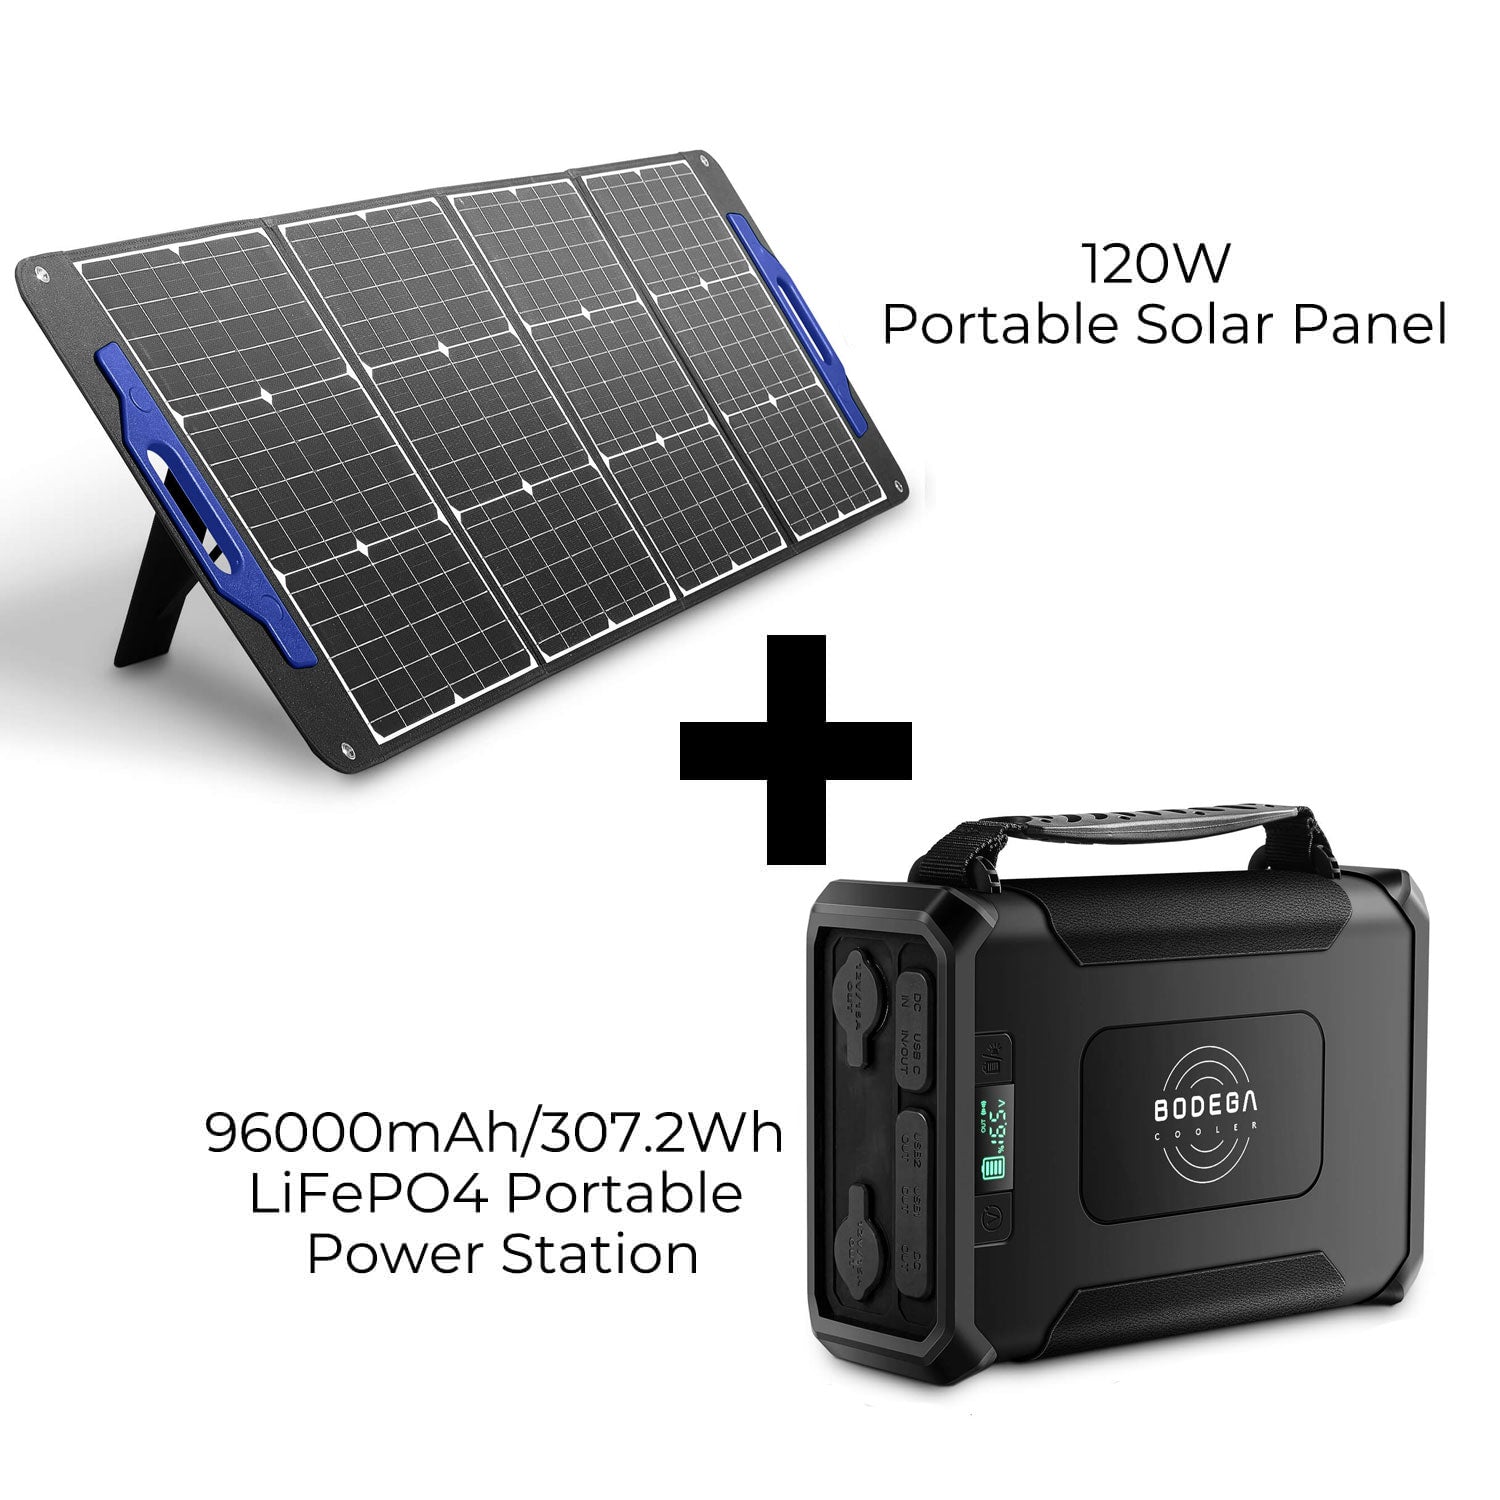 BODEGAcooler 120W Portable Solar Panel Alternative Clean Source